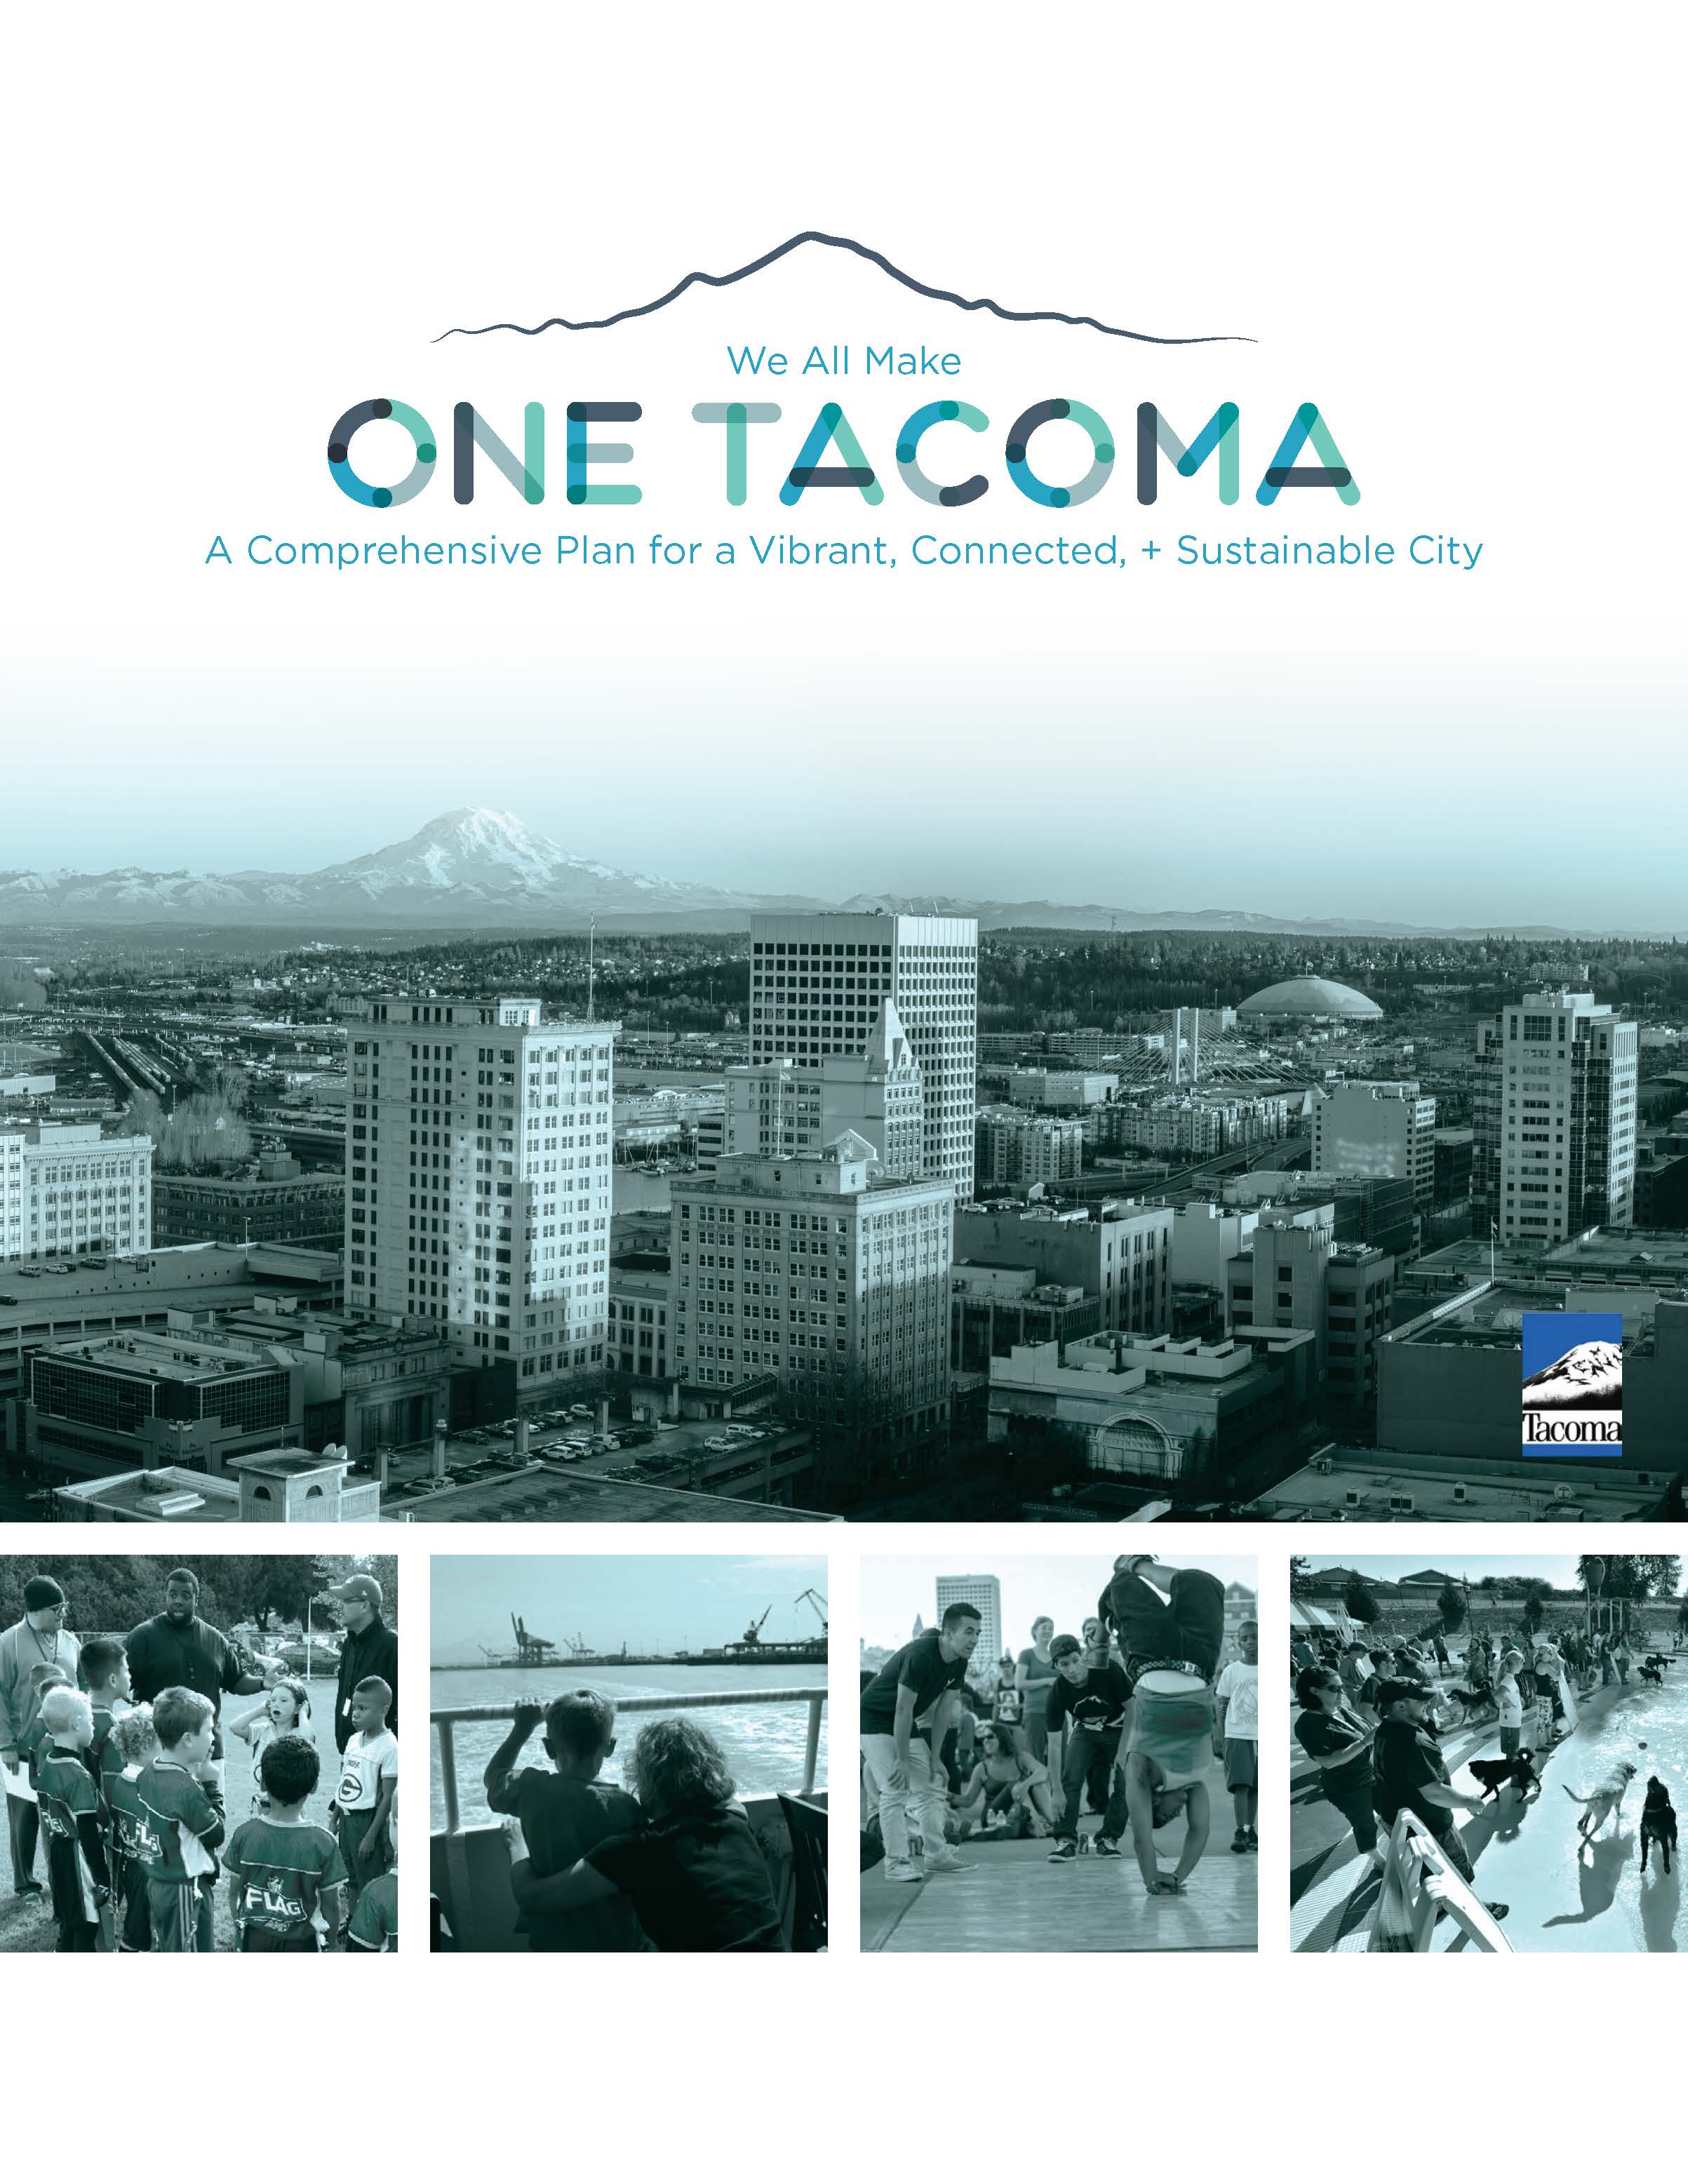 One Tacoma